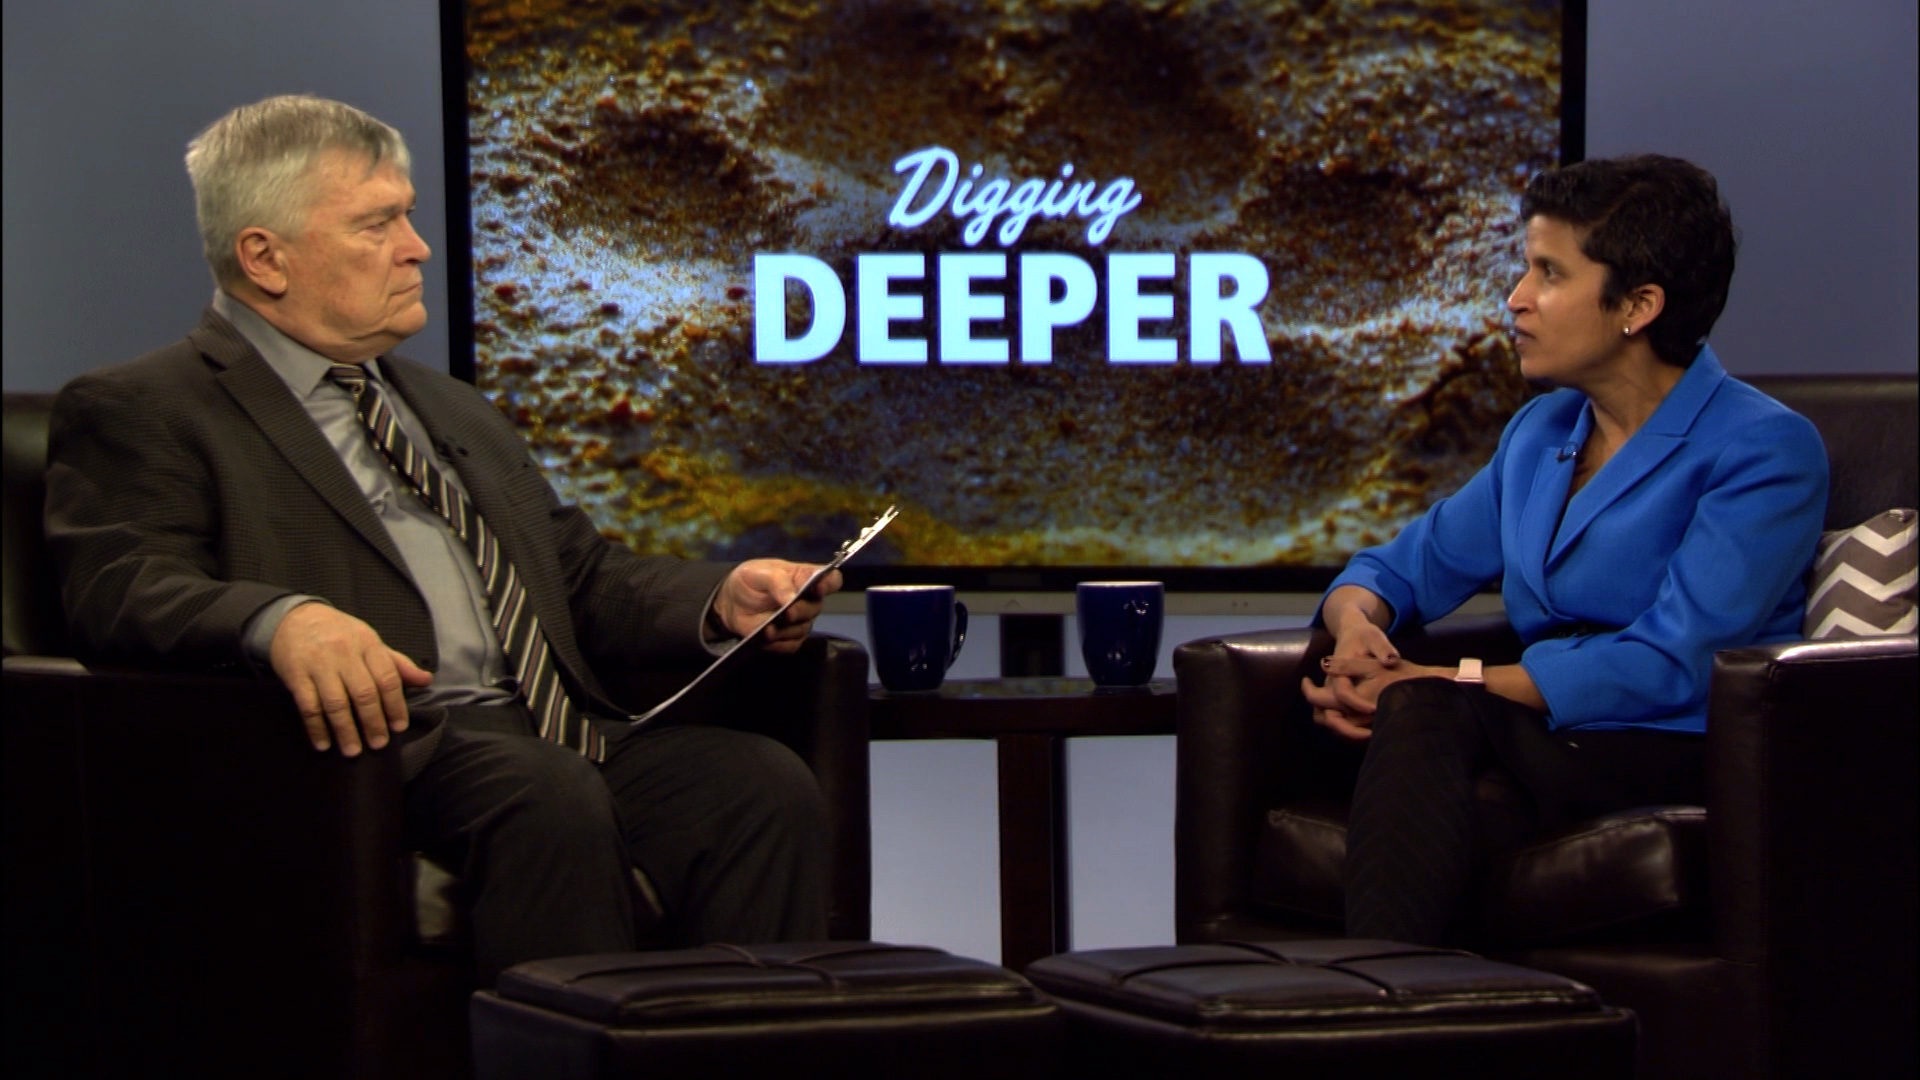 Eric Barrona and Shoba Sivaprasad on the set of Digging Deeper